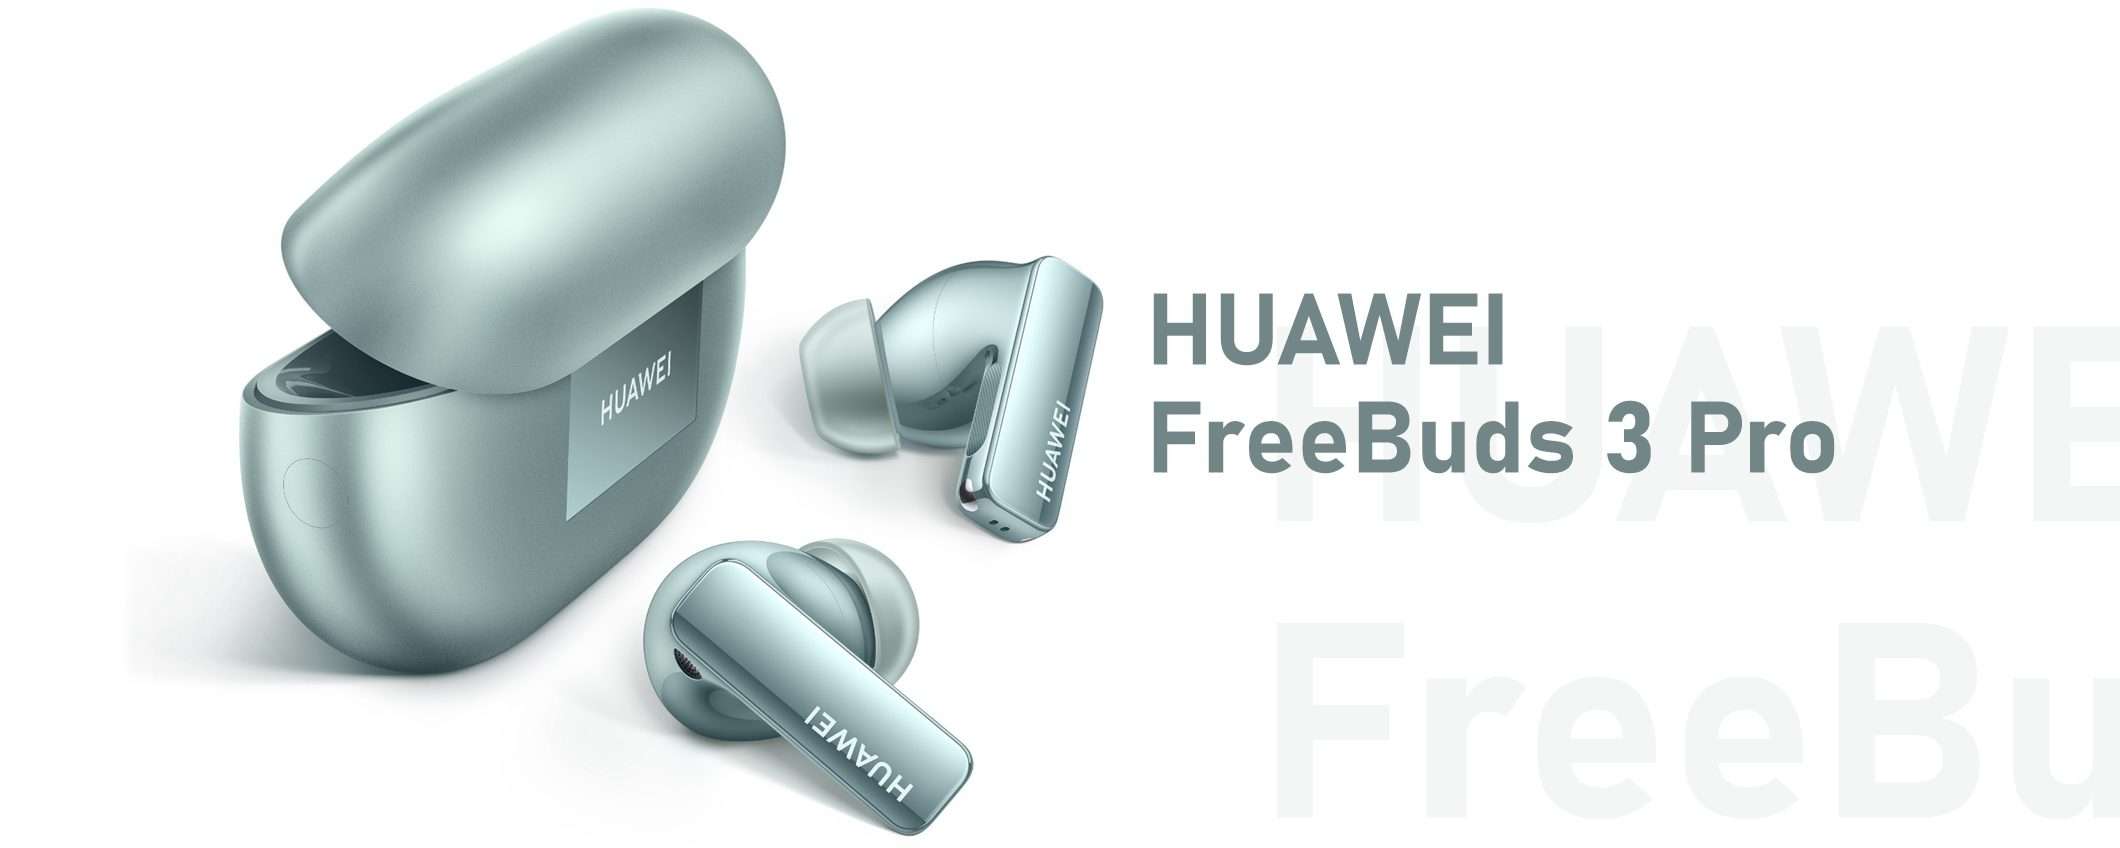 Huawei FreeBuds Pro 3: tanta qualità, tantissimo sconto (e niente IVA)